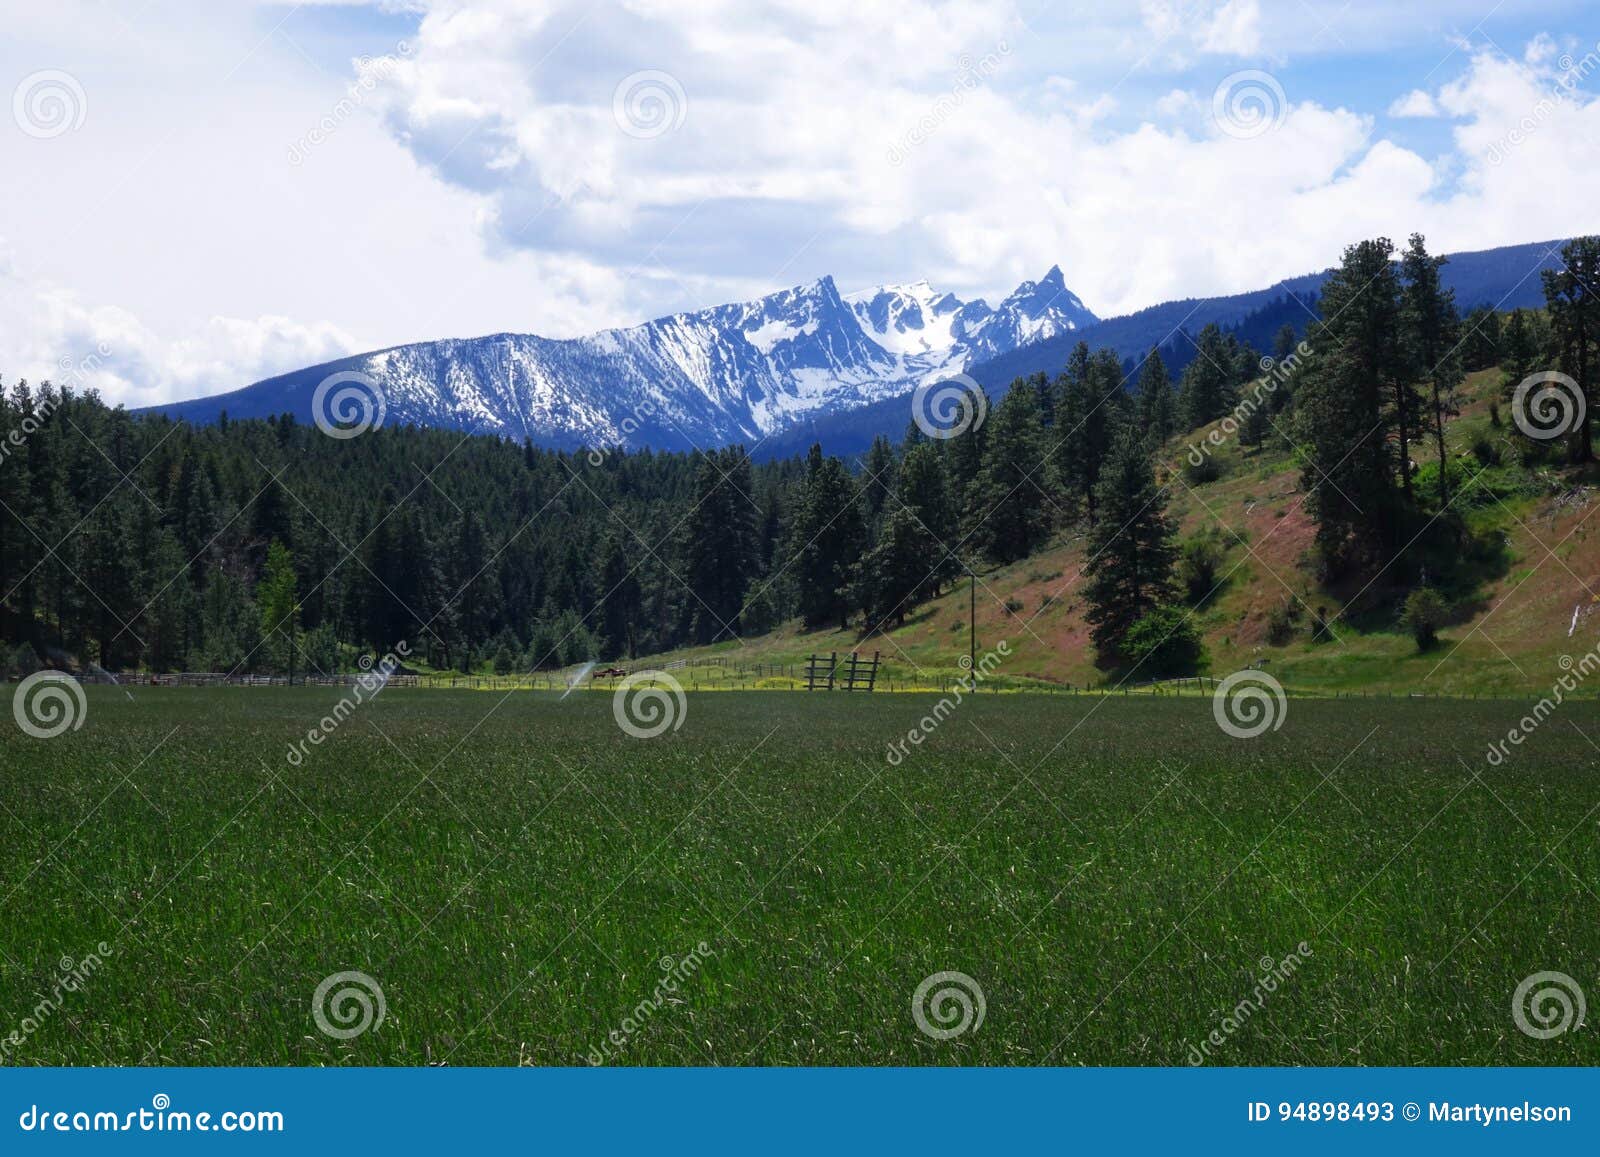 trapper peak, bitterroot mountains - montana